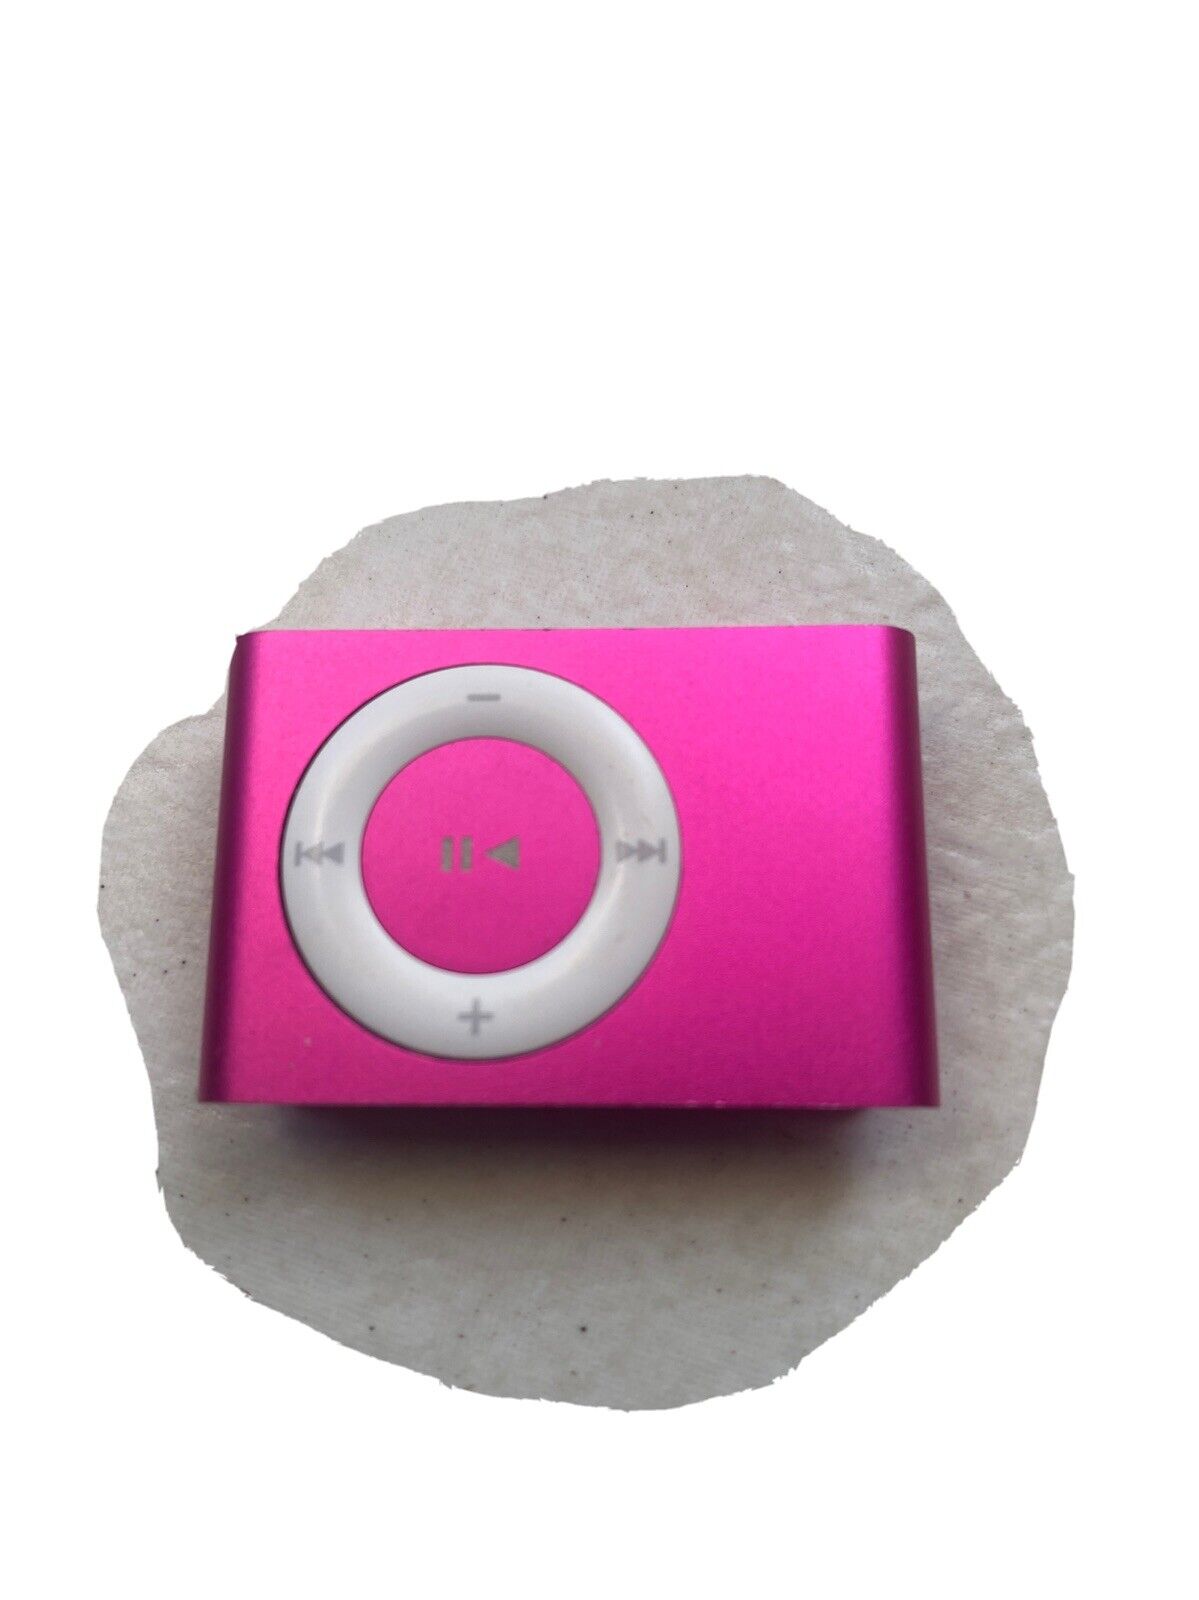 ipod shuffle pink